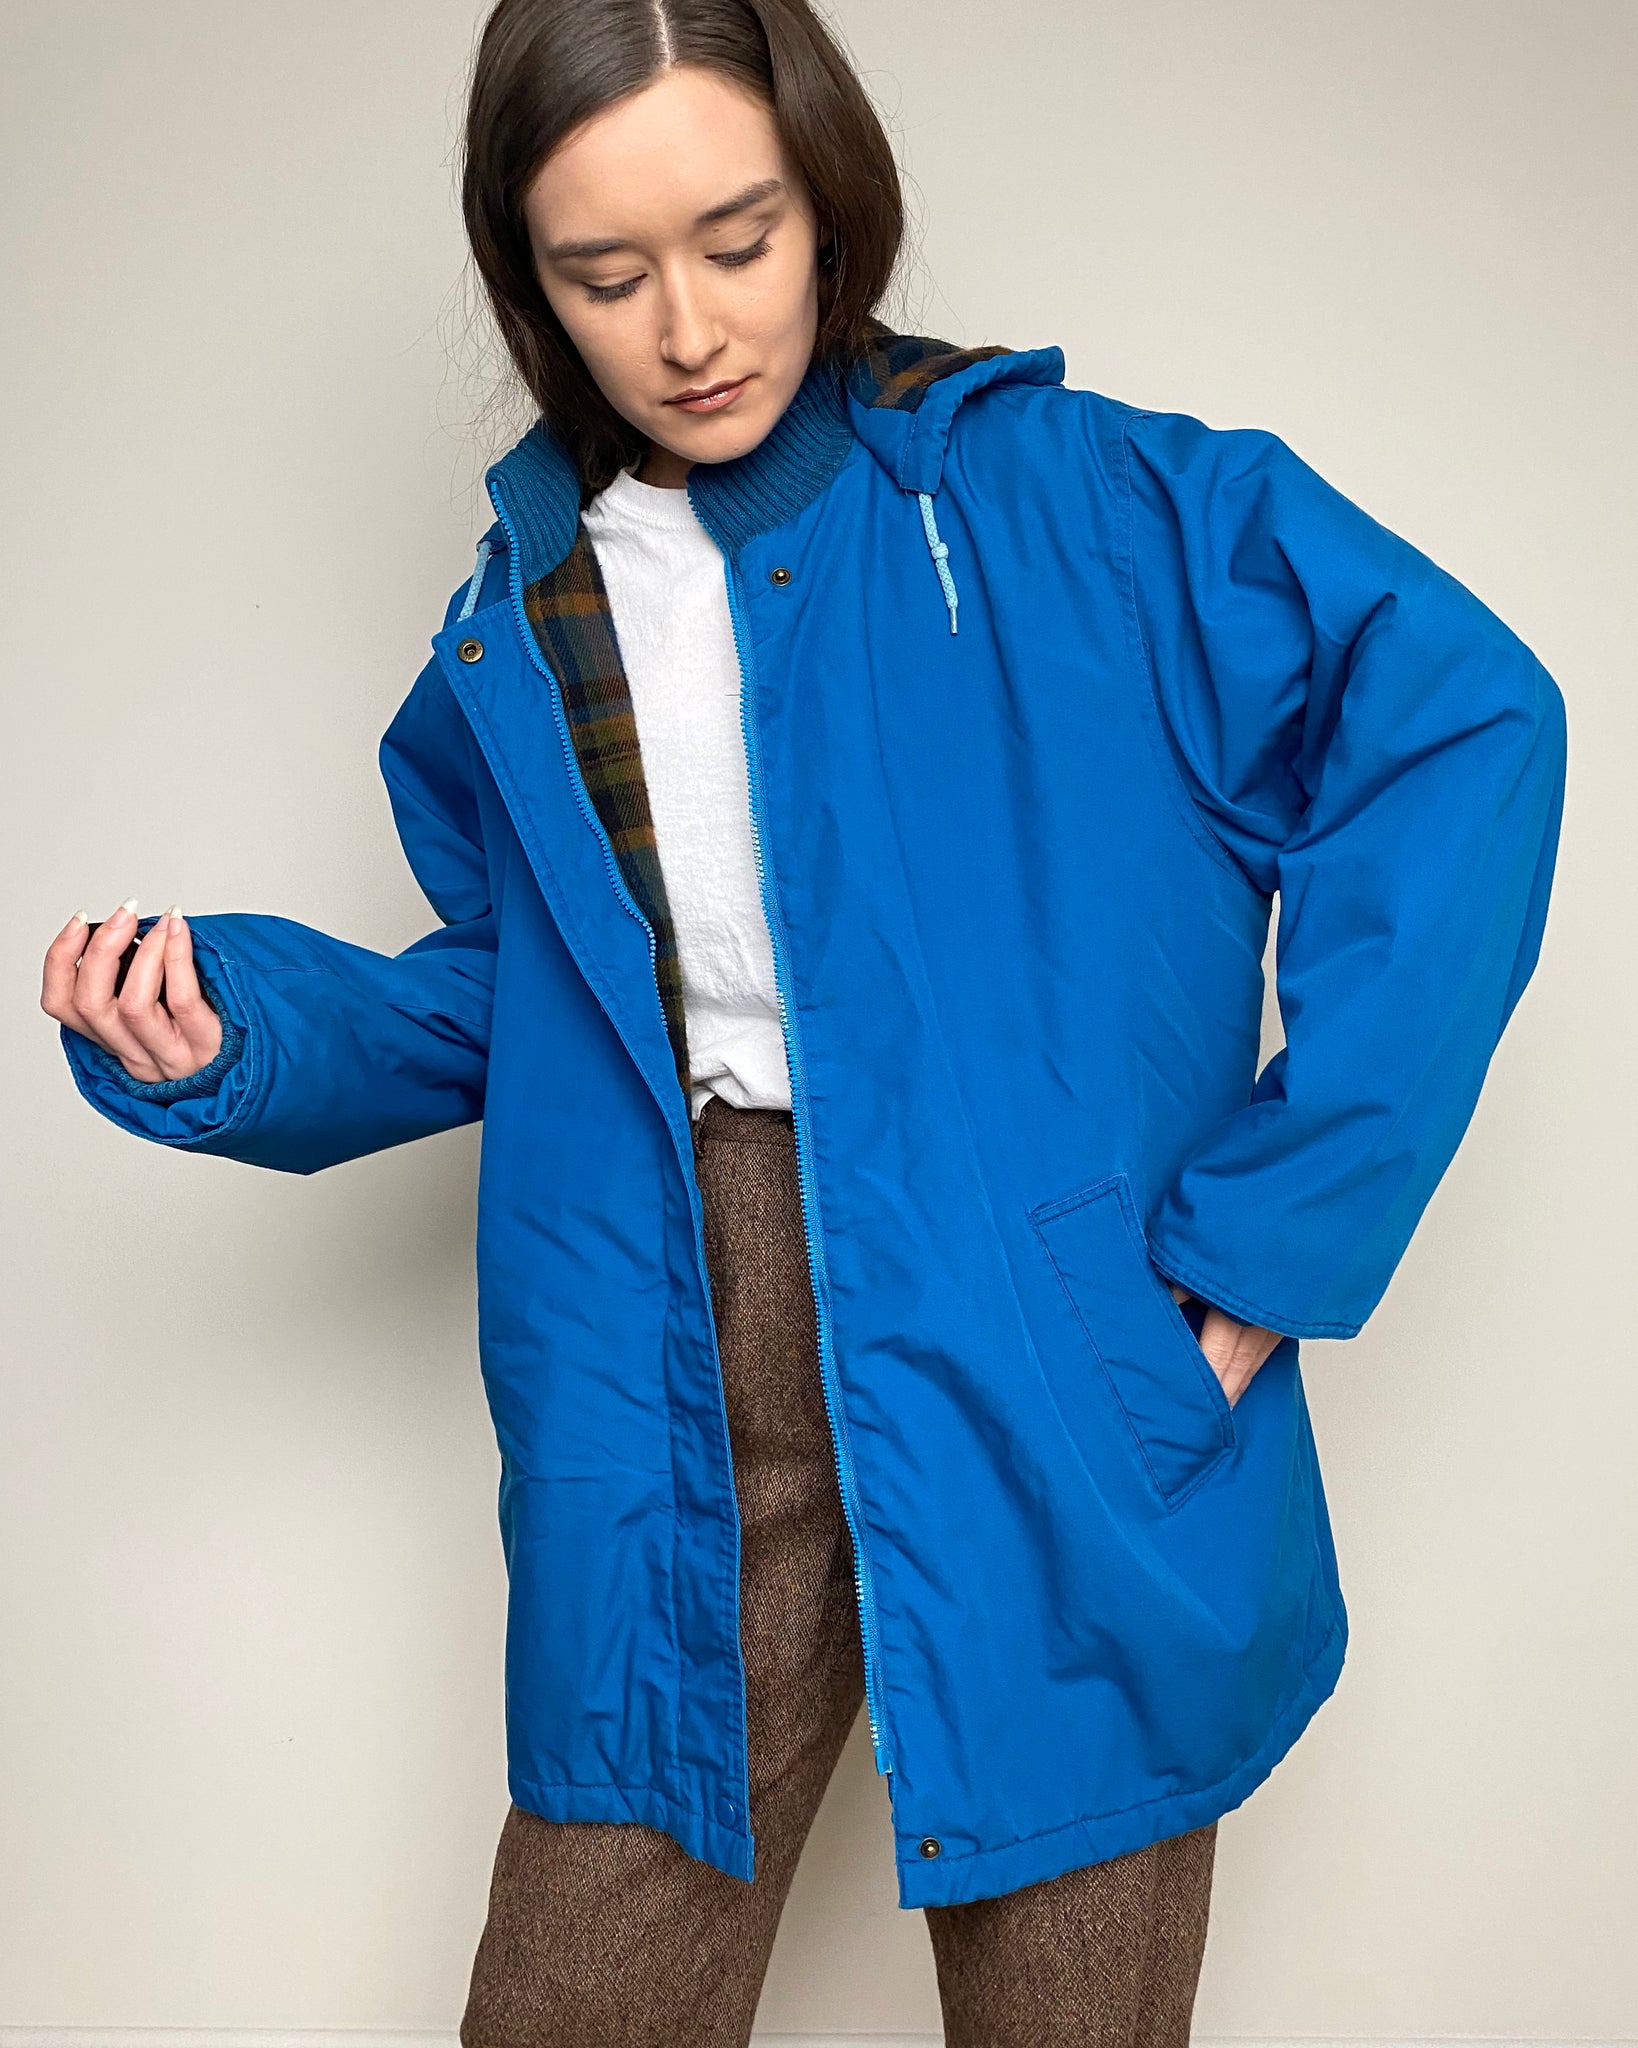 Plaid lined Hood Jacket (size M)